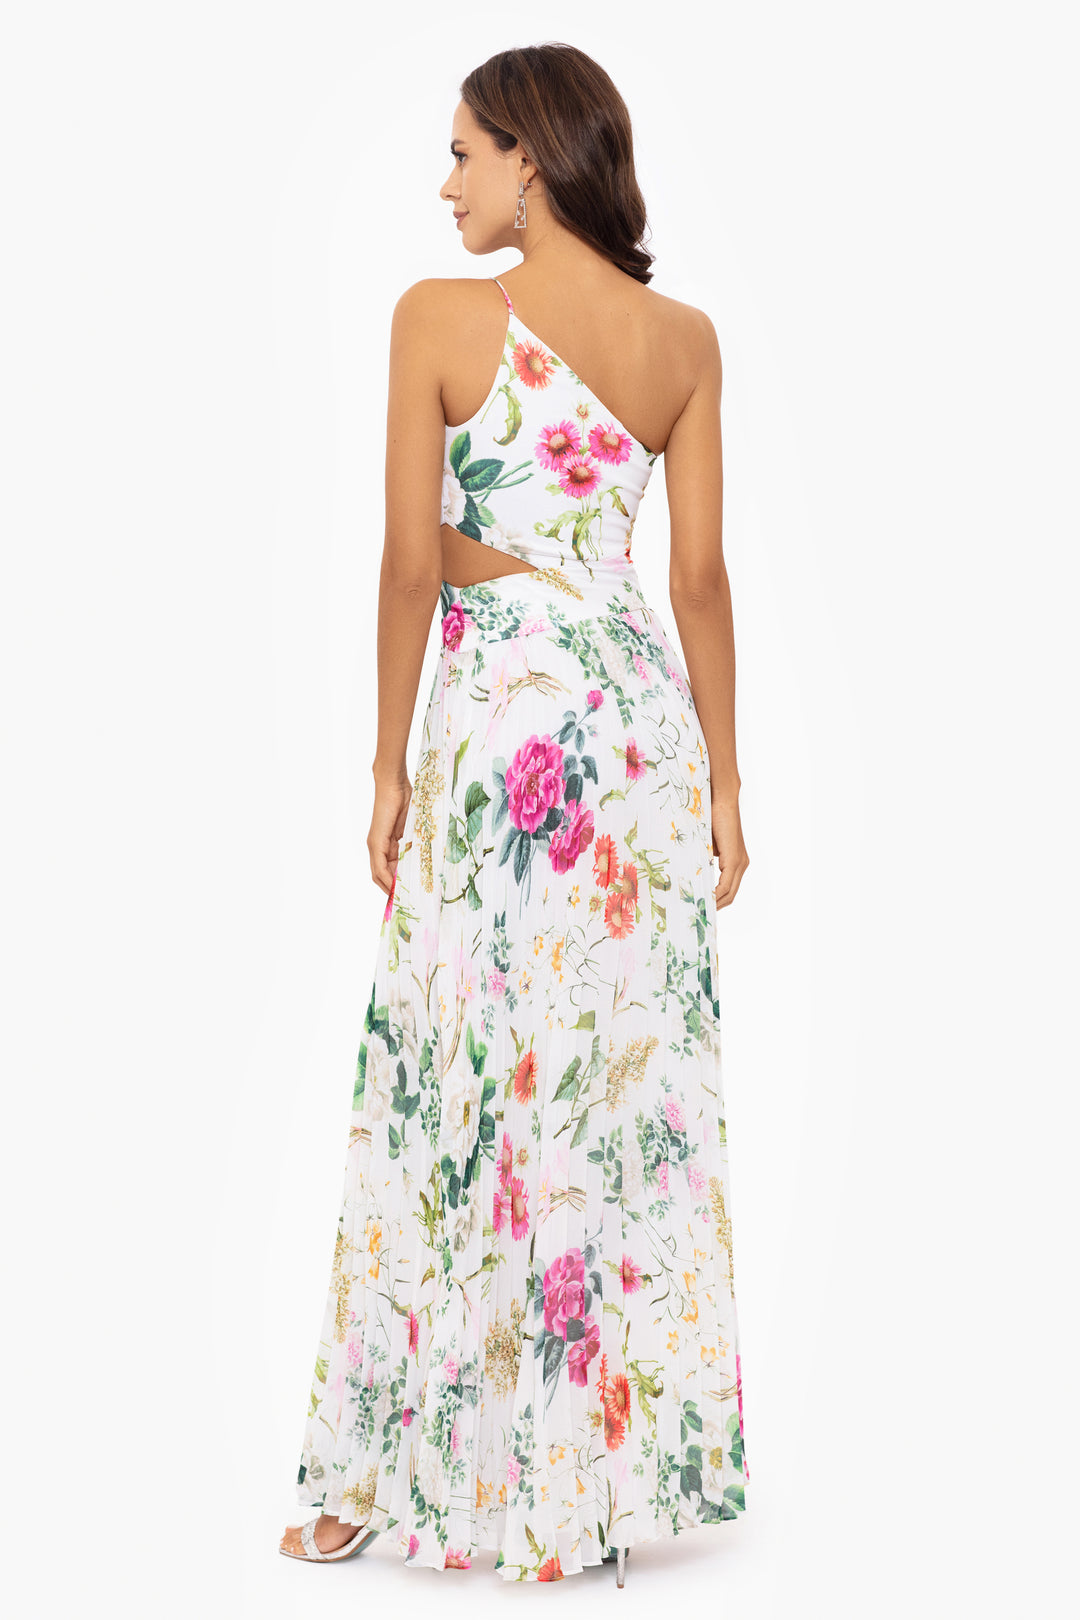 "Naomi" Long One Shoulder Floral Chiffon Dress